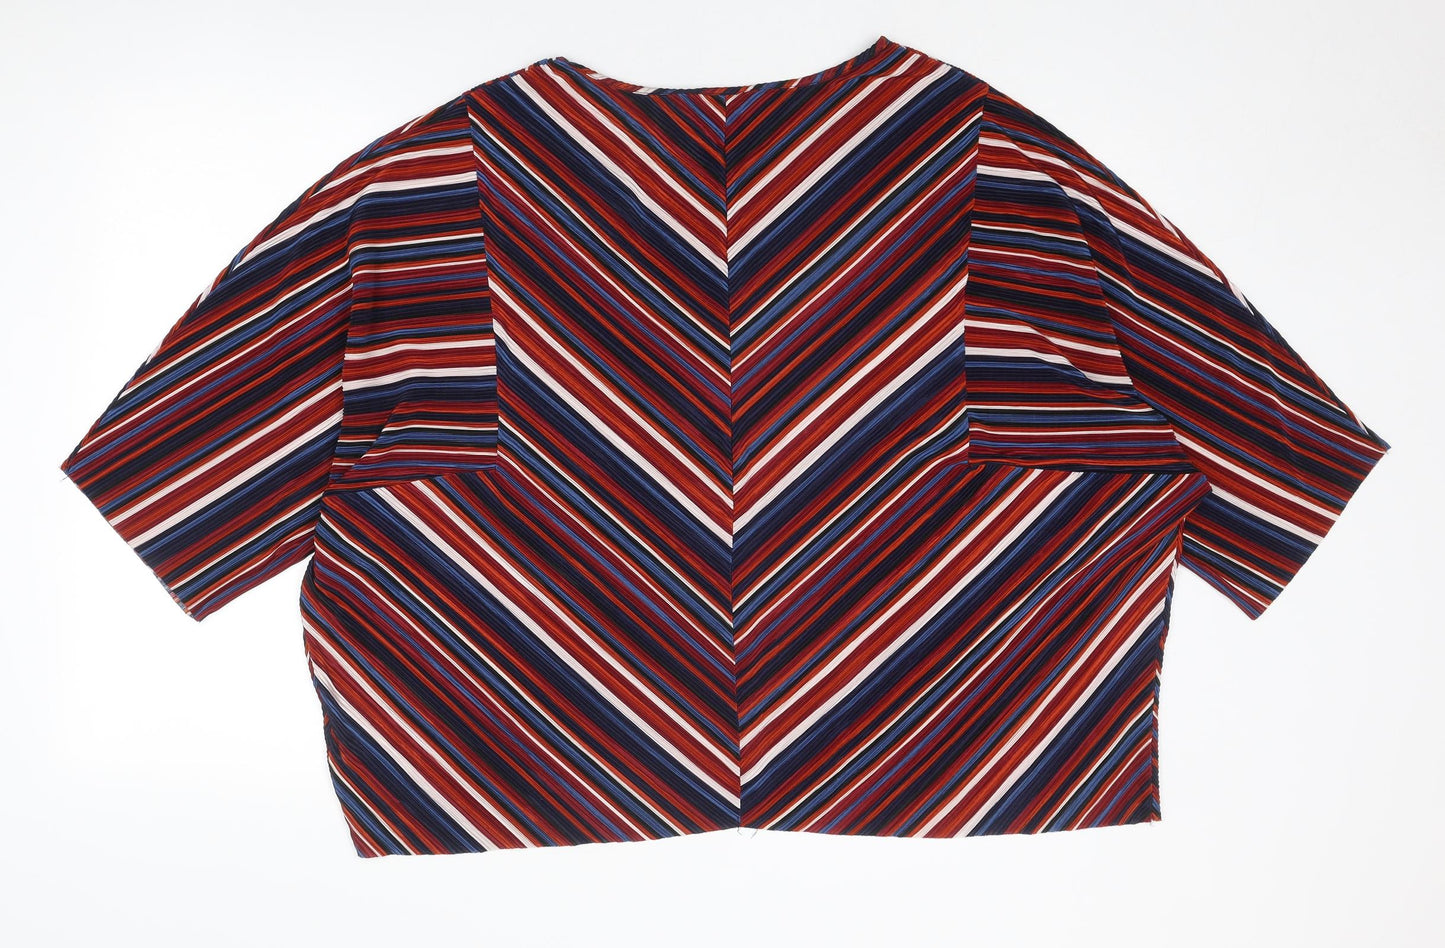 Bonmarché Womens Multicoloured Striped Polyester Basic Blouse Size 24 Boat Neck - Size 24-26